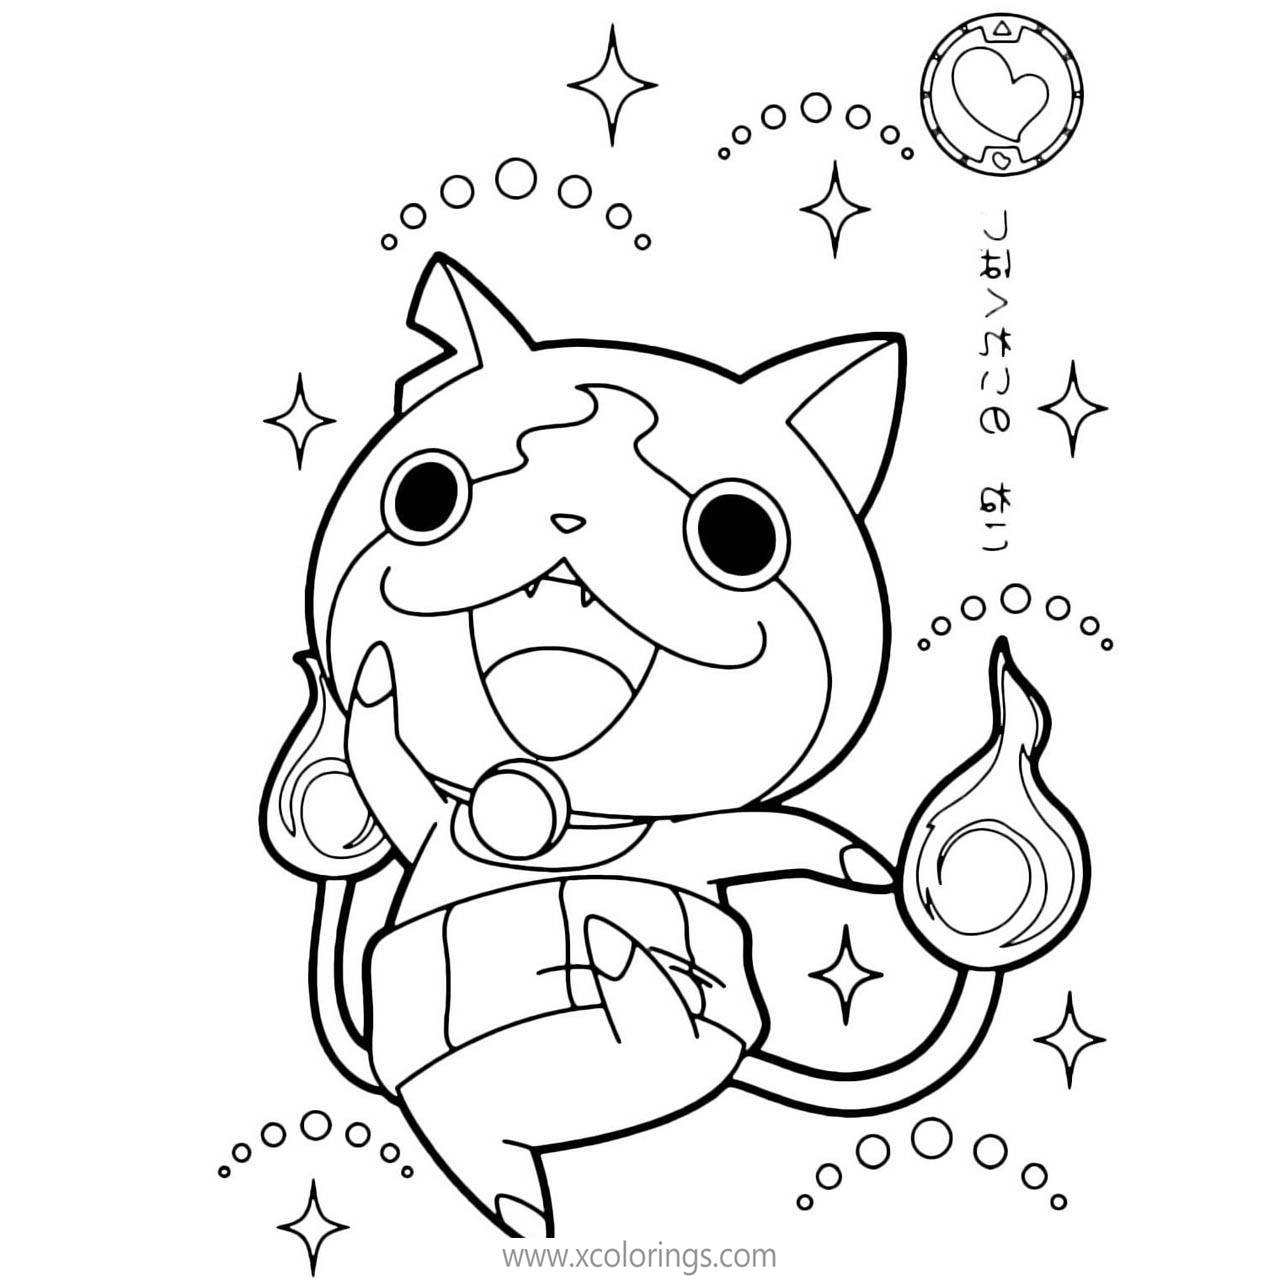 Free Cute Jibanyan from Yo-Kai Watch Coloring Pages printable